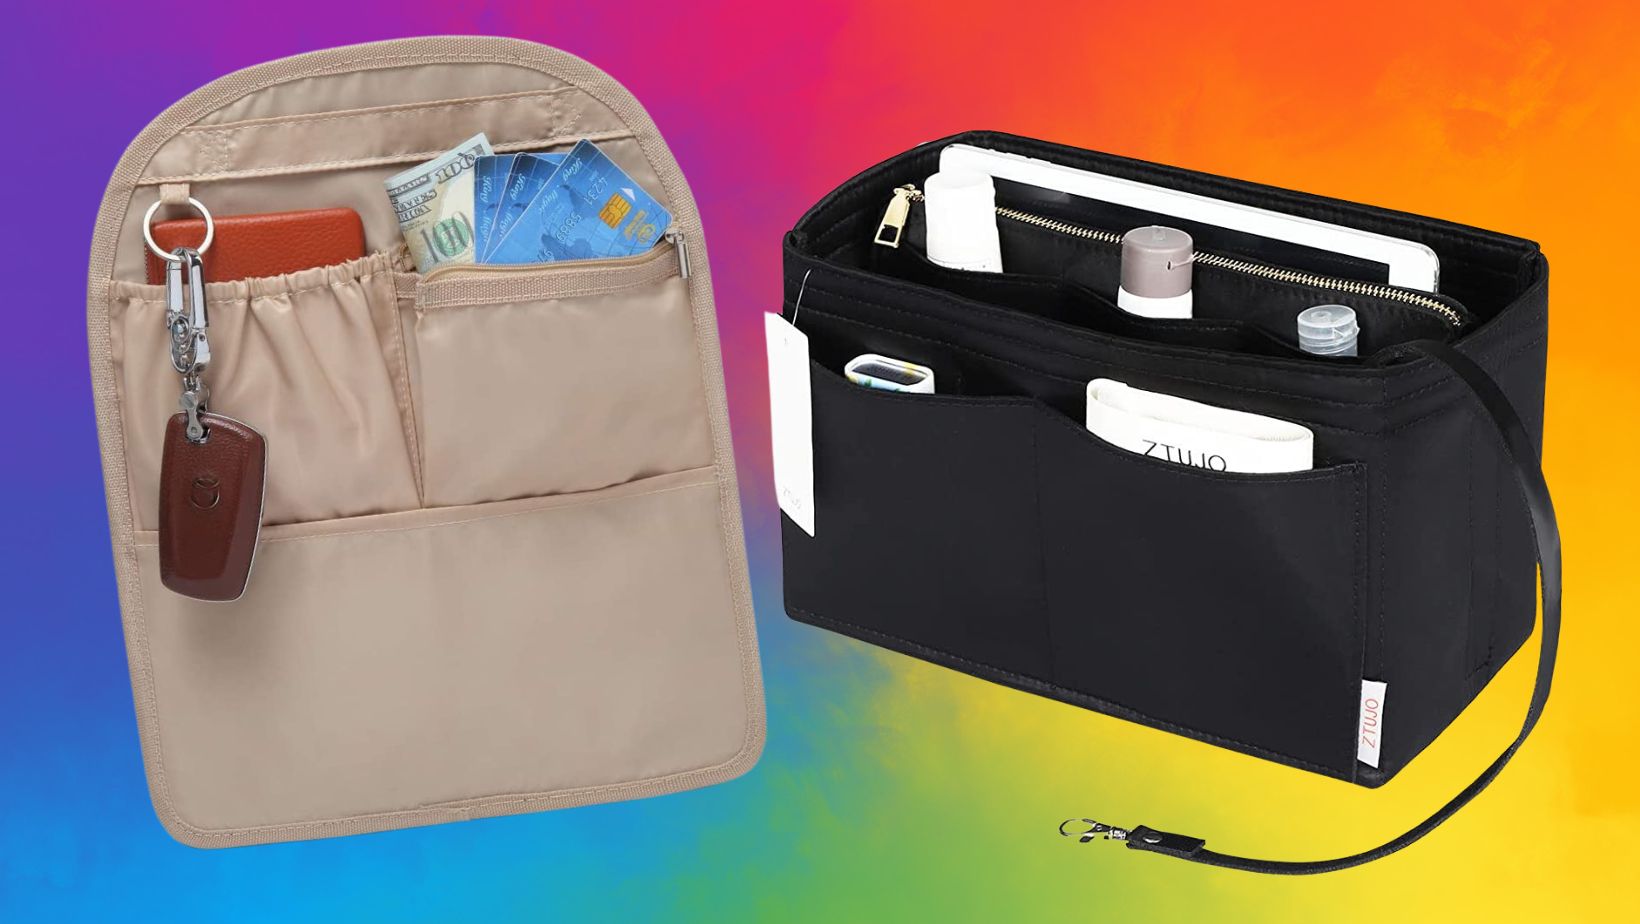 DGAZ Bag Organizer Insert For Hermes Cargo Picotin Bags, Silk Purse Or